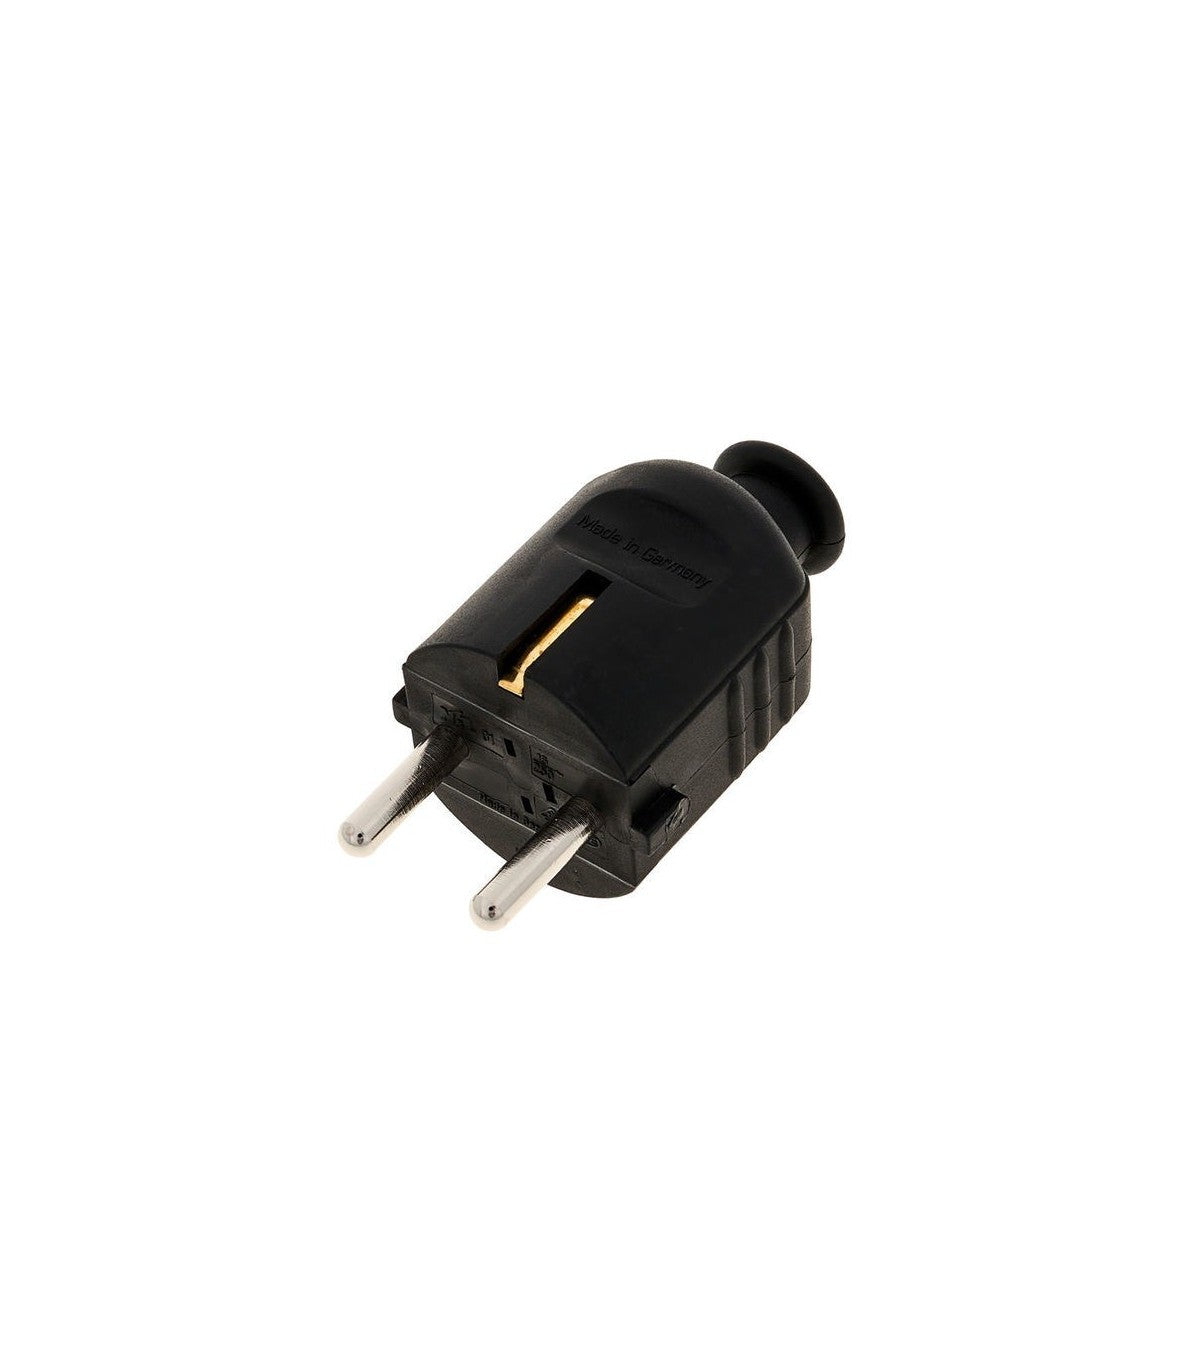 PCE 02974-BK 16 Amp 3 Pin Schuko Plug, Black IP20 Price in Pakistan